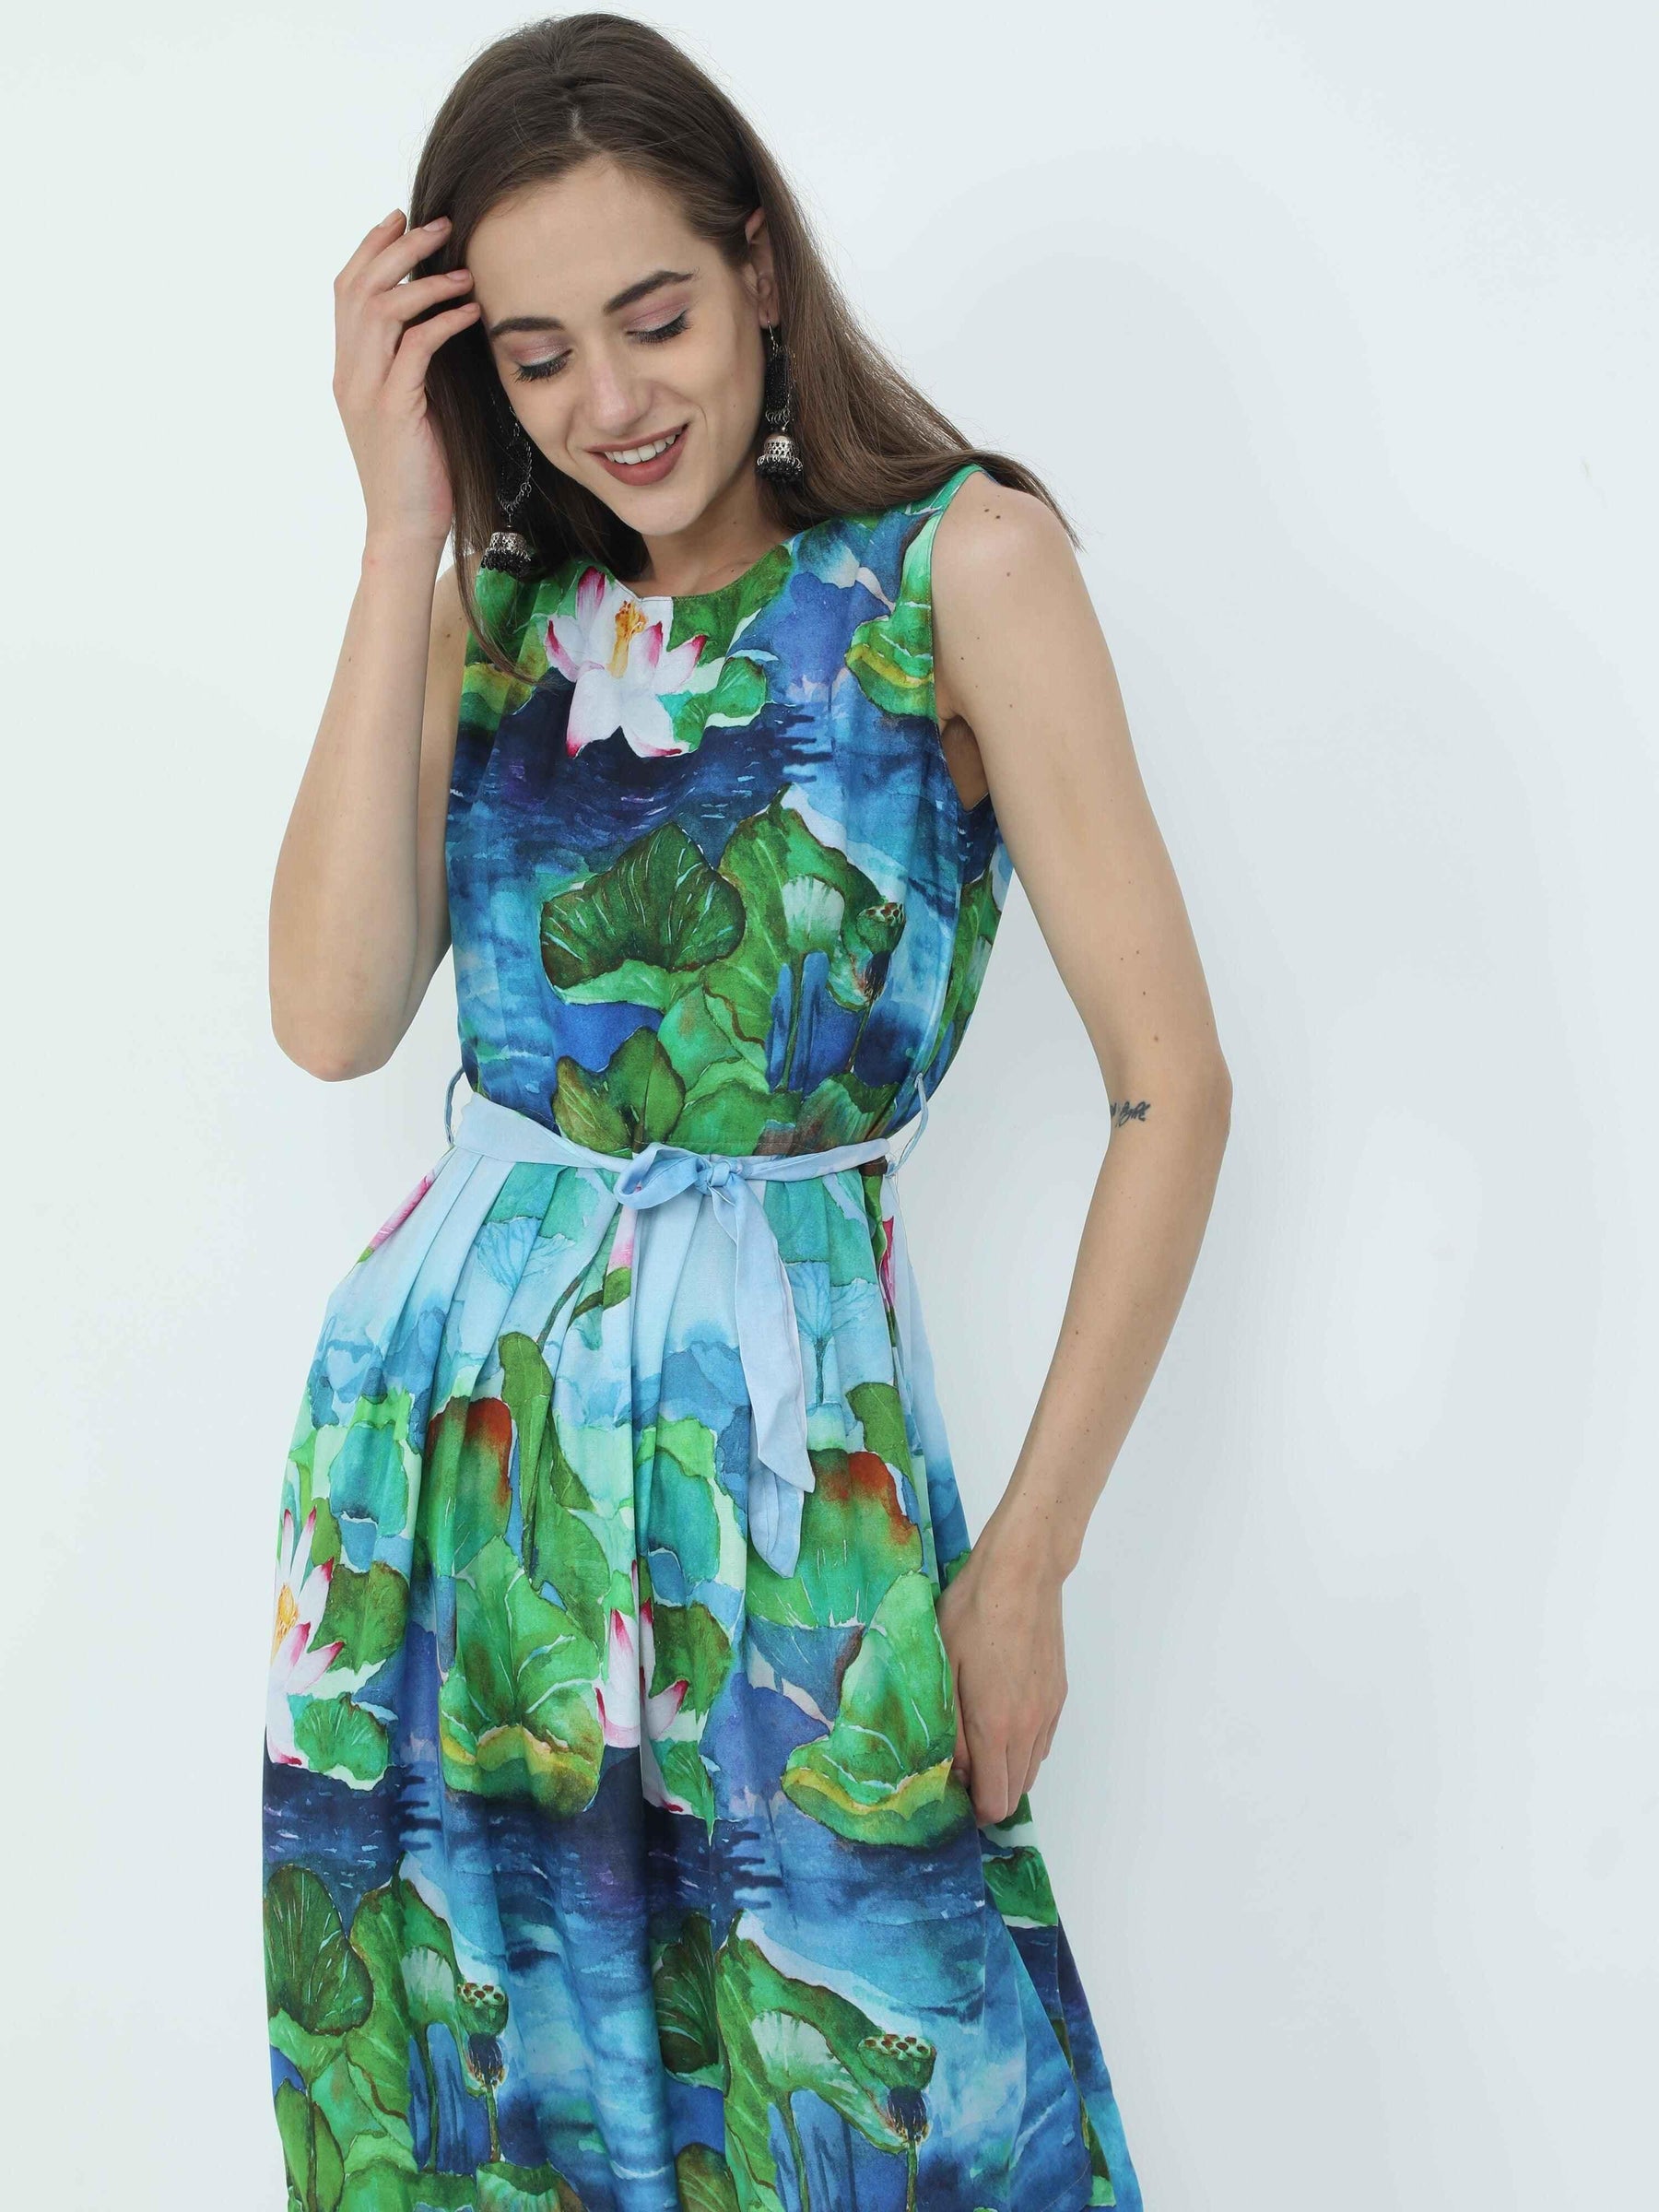 Floral Print Knee Length Dress